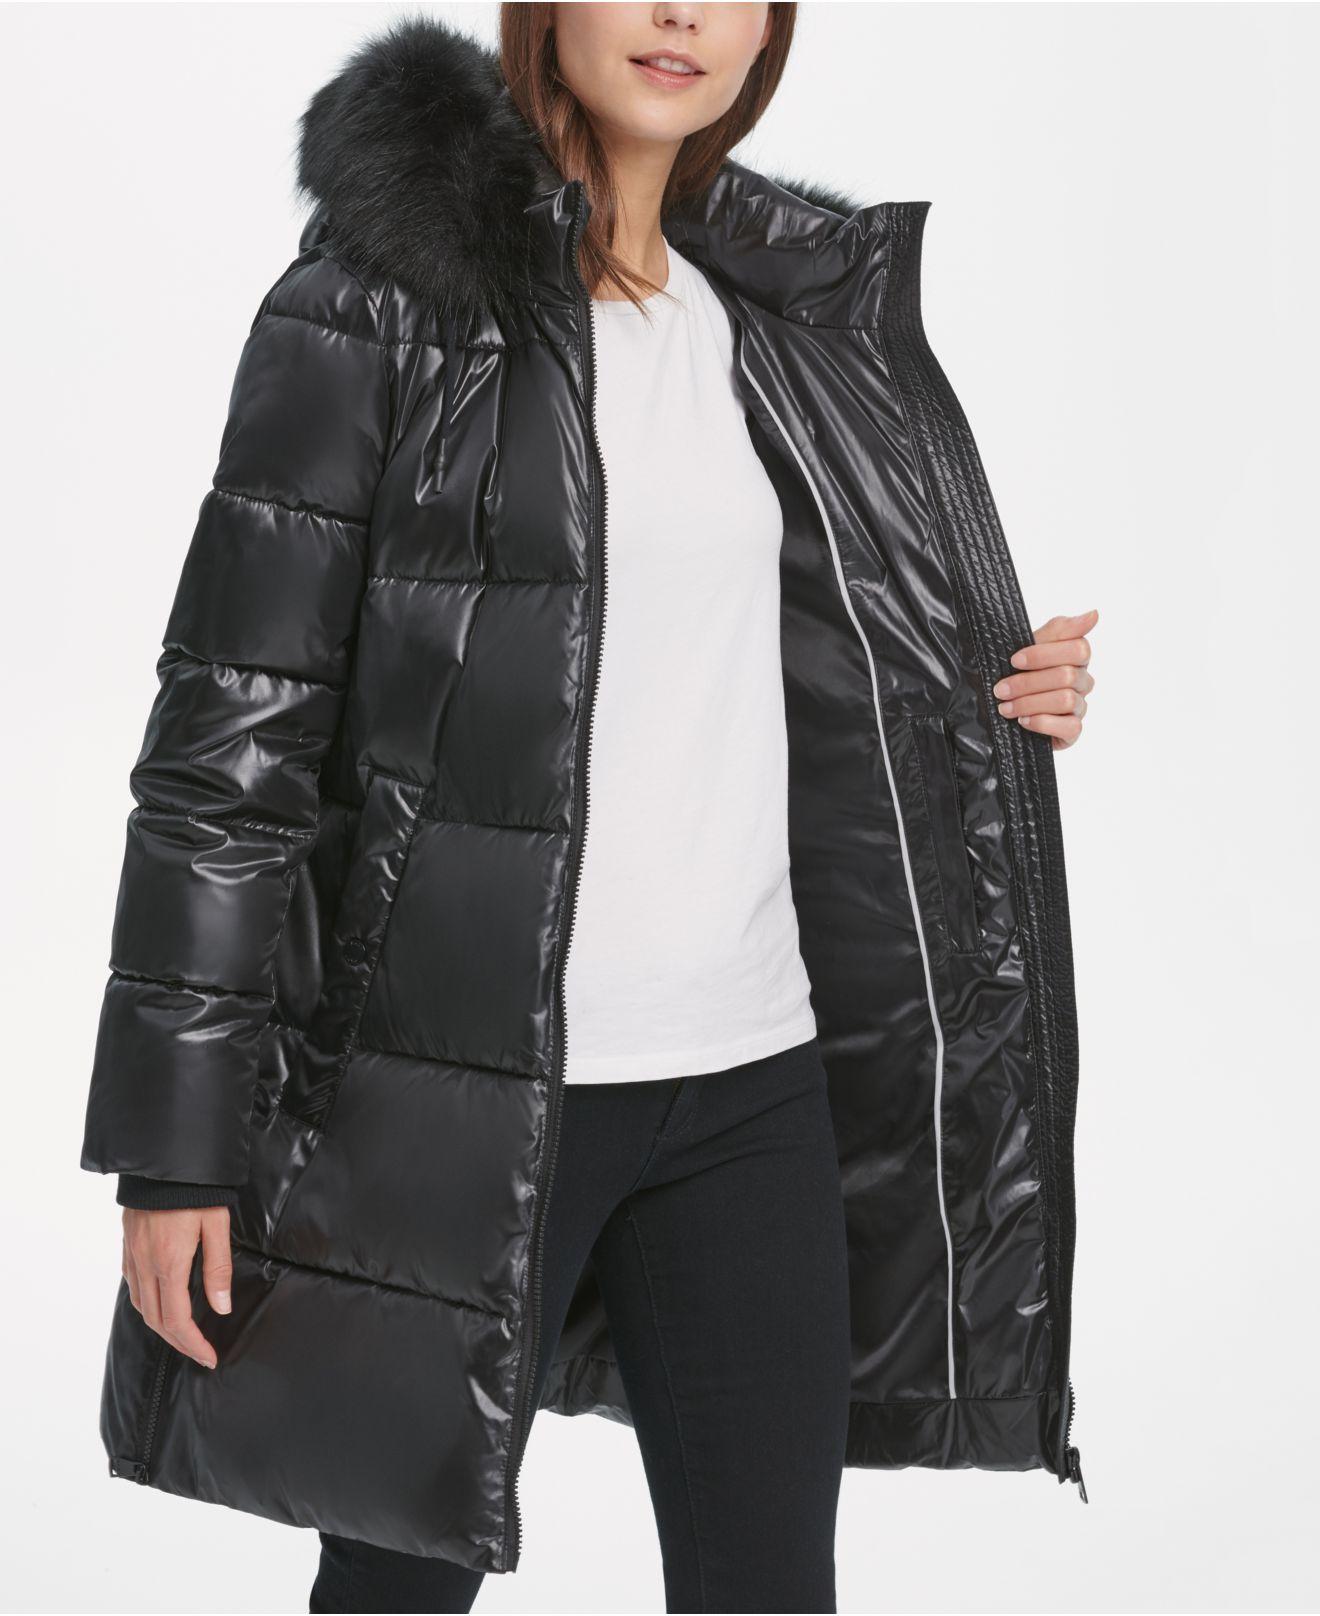 DKNY High-shine Faux-fur-trim Hooded Puffer Coat in Black - Lyst